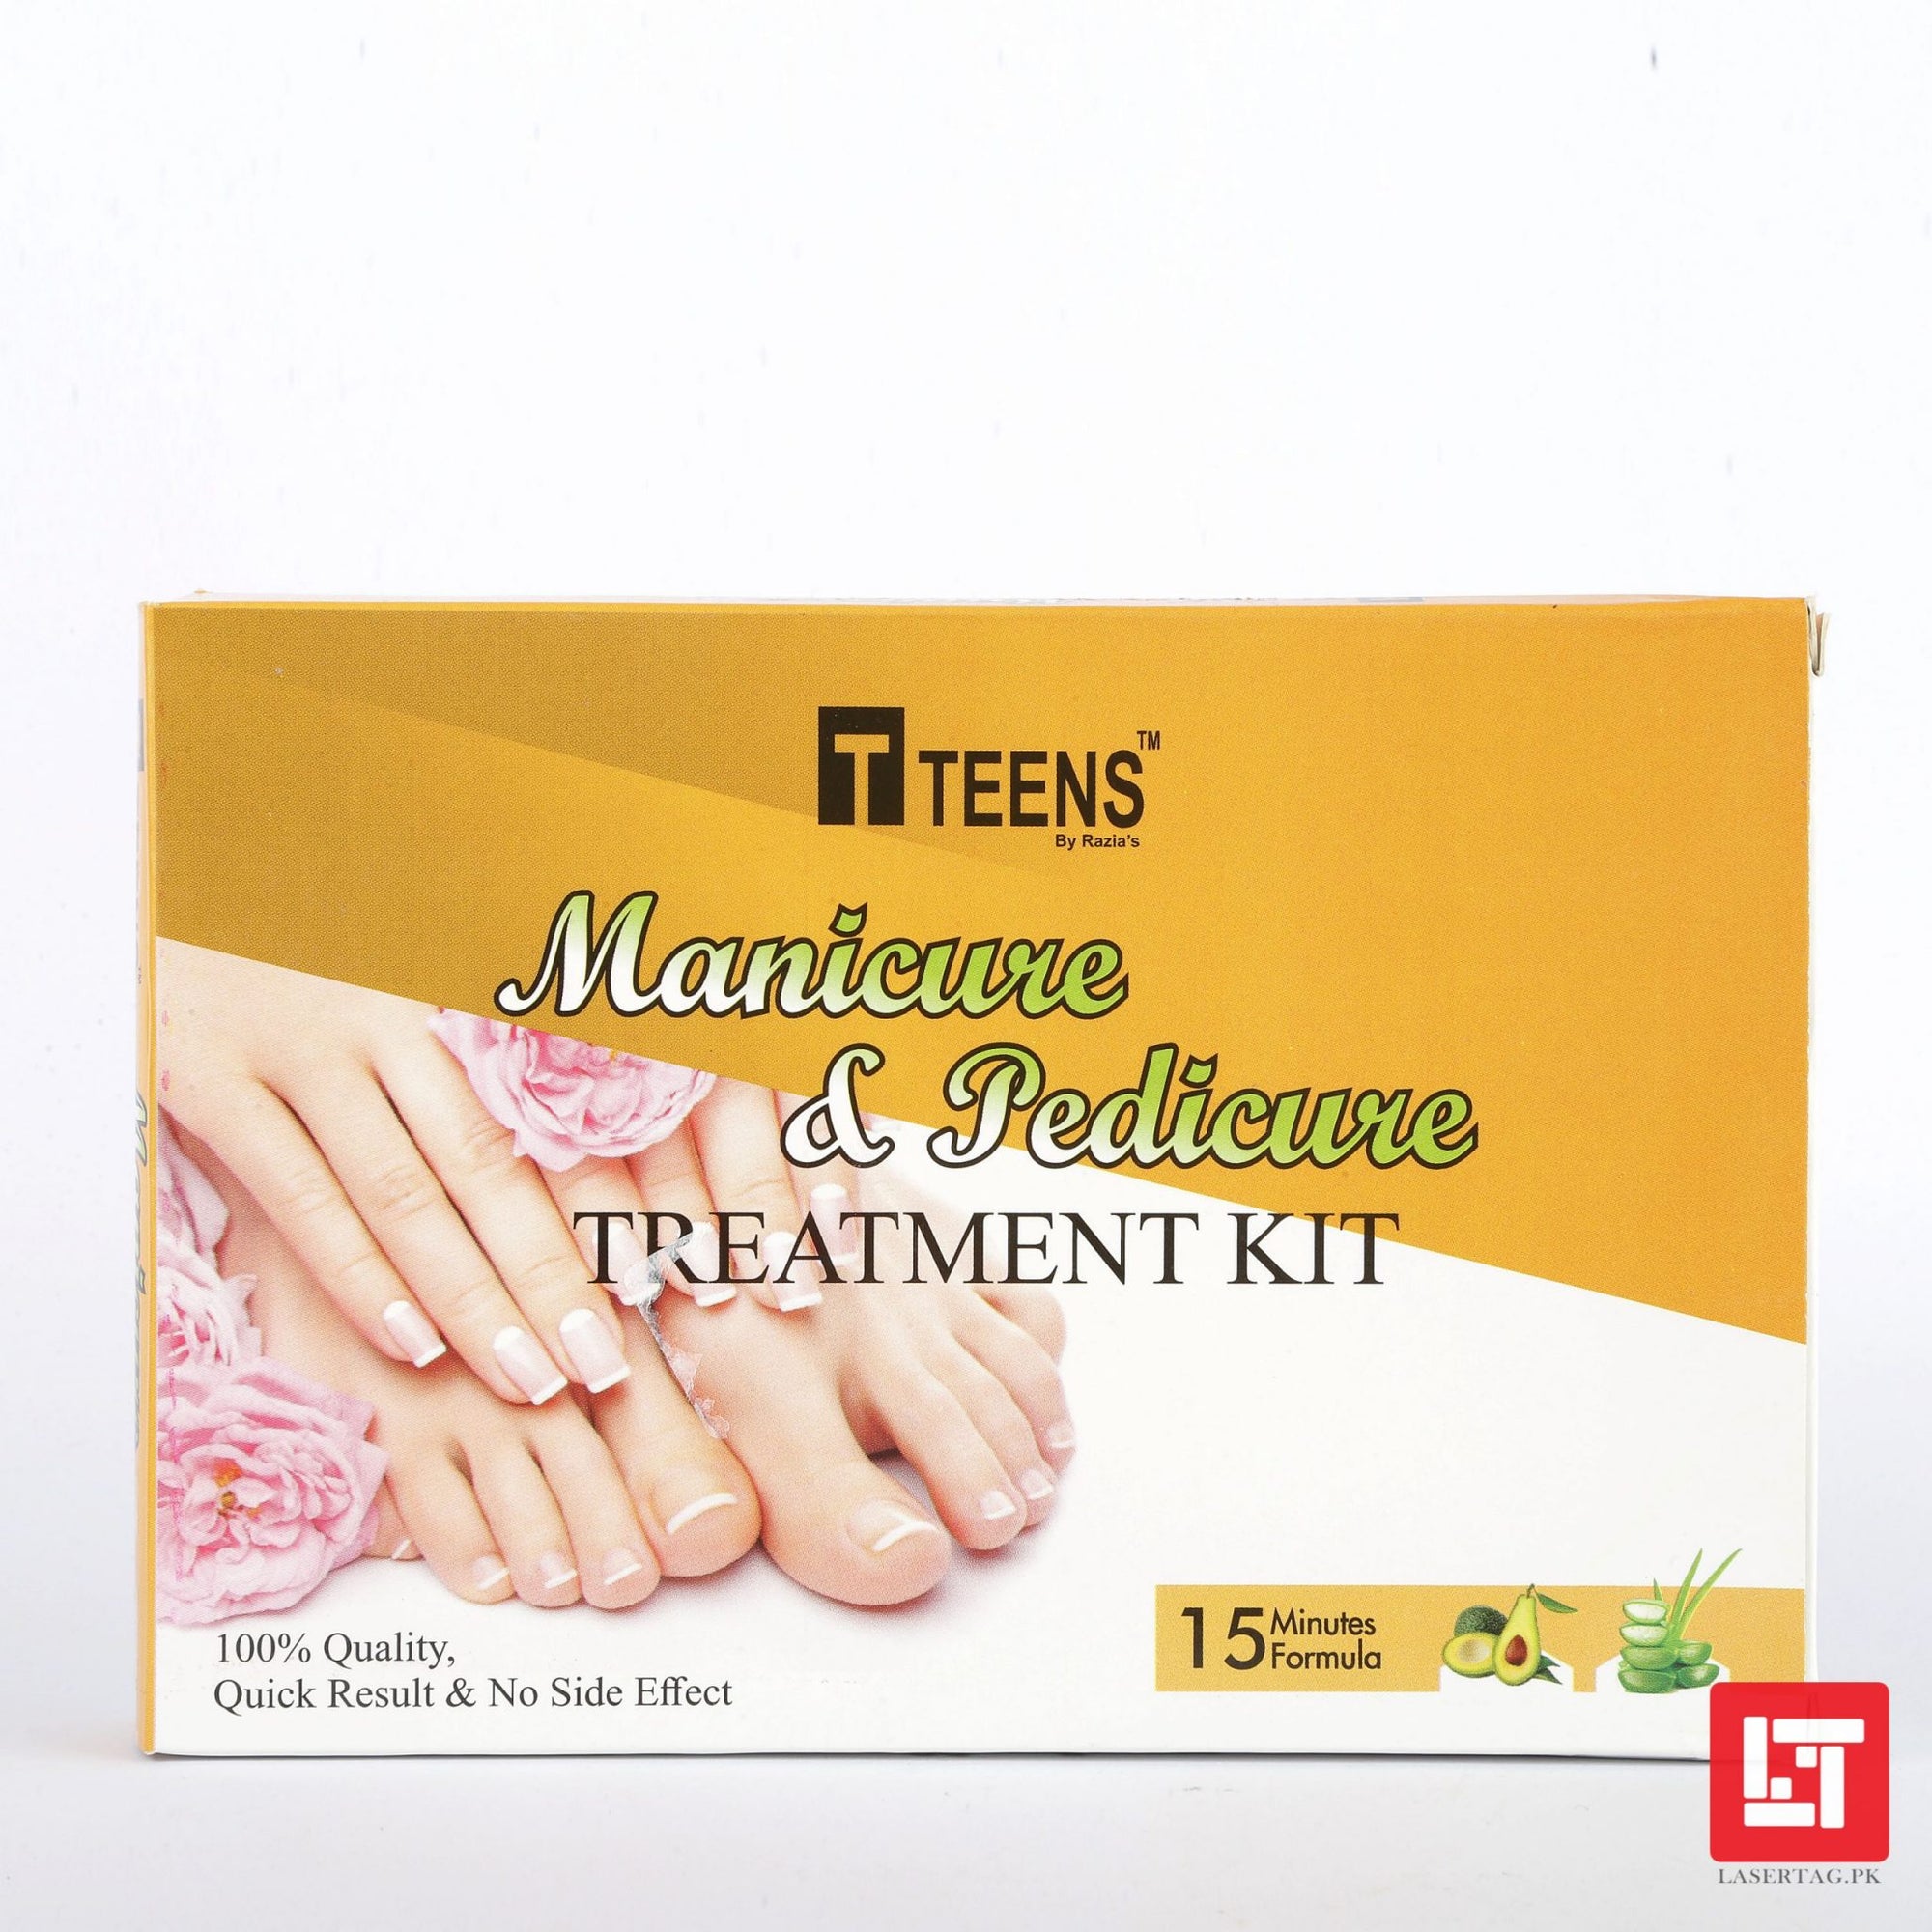 Teens Manicure & Pedicure Treatment Kit 15 Minutes Formula freeshipping - lasertag.pk